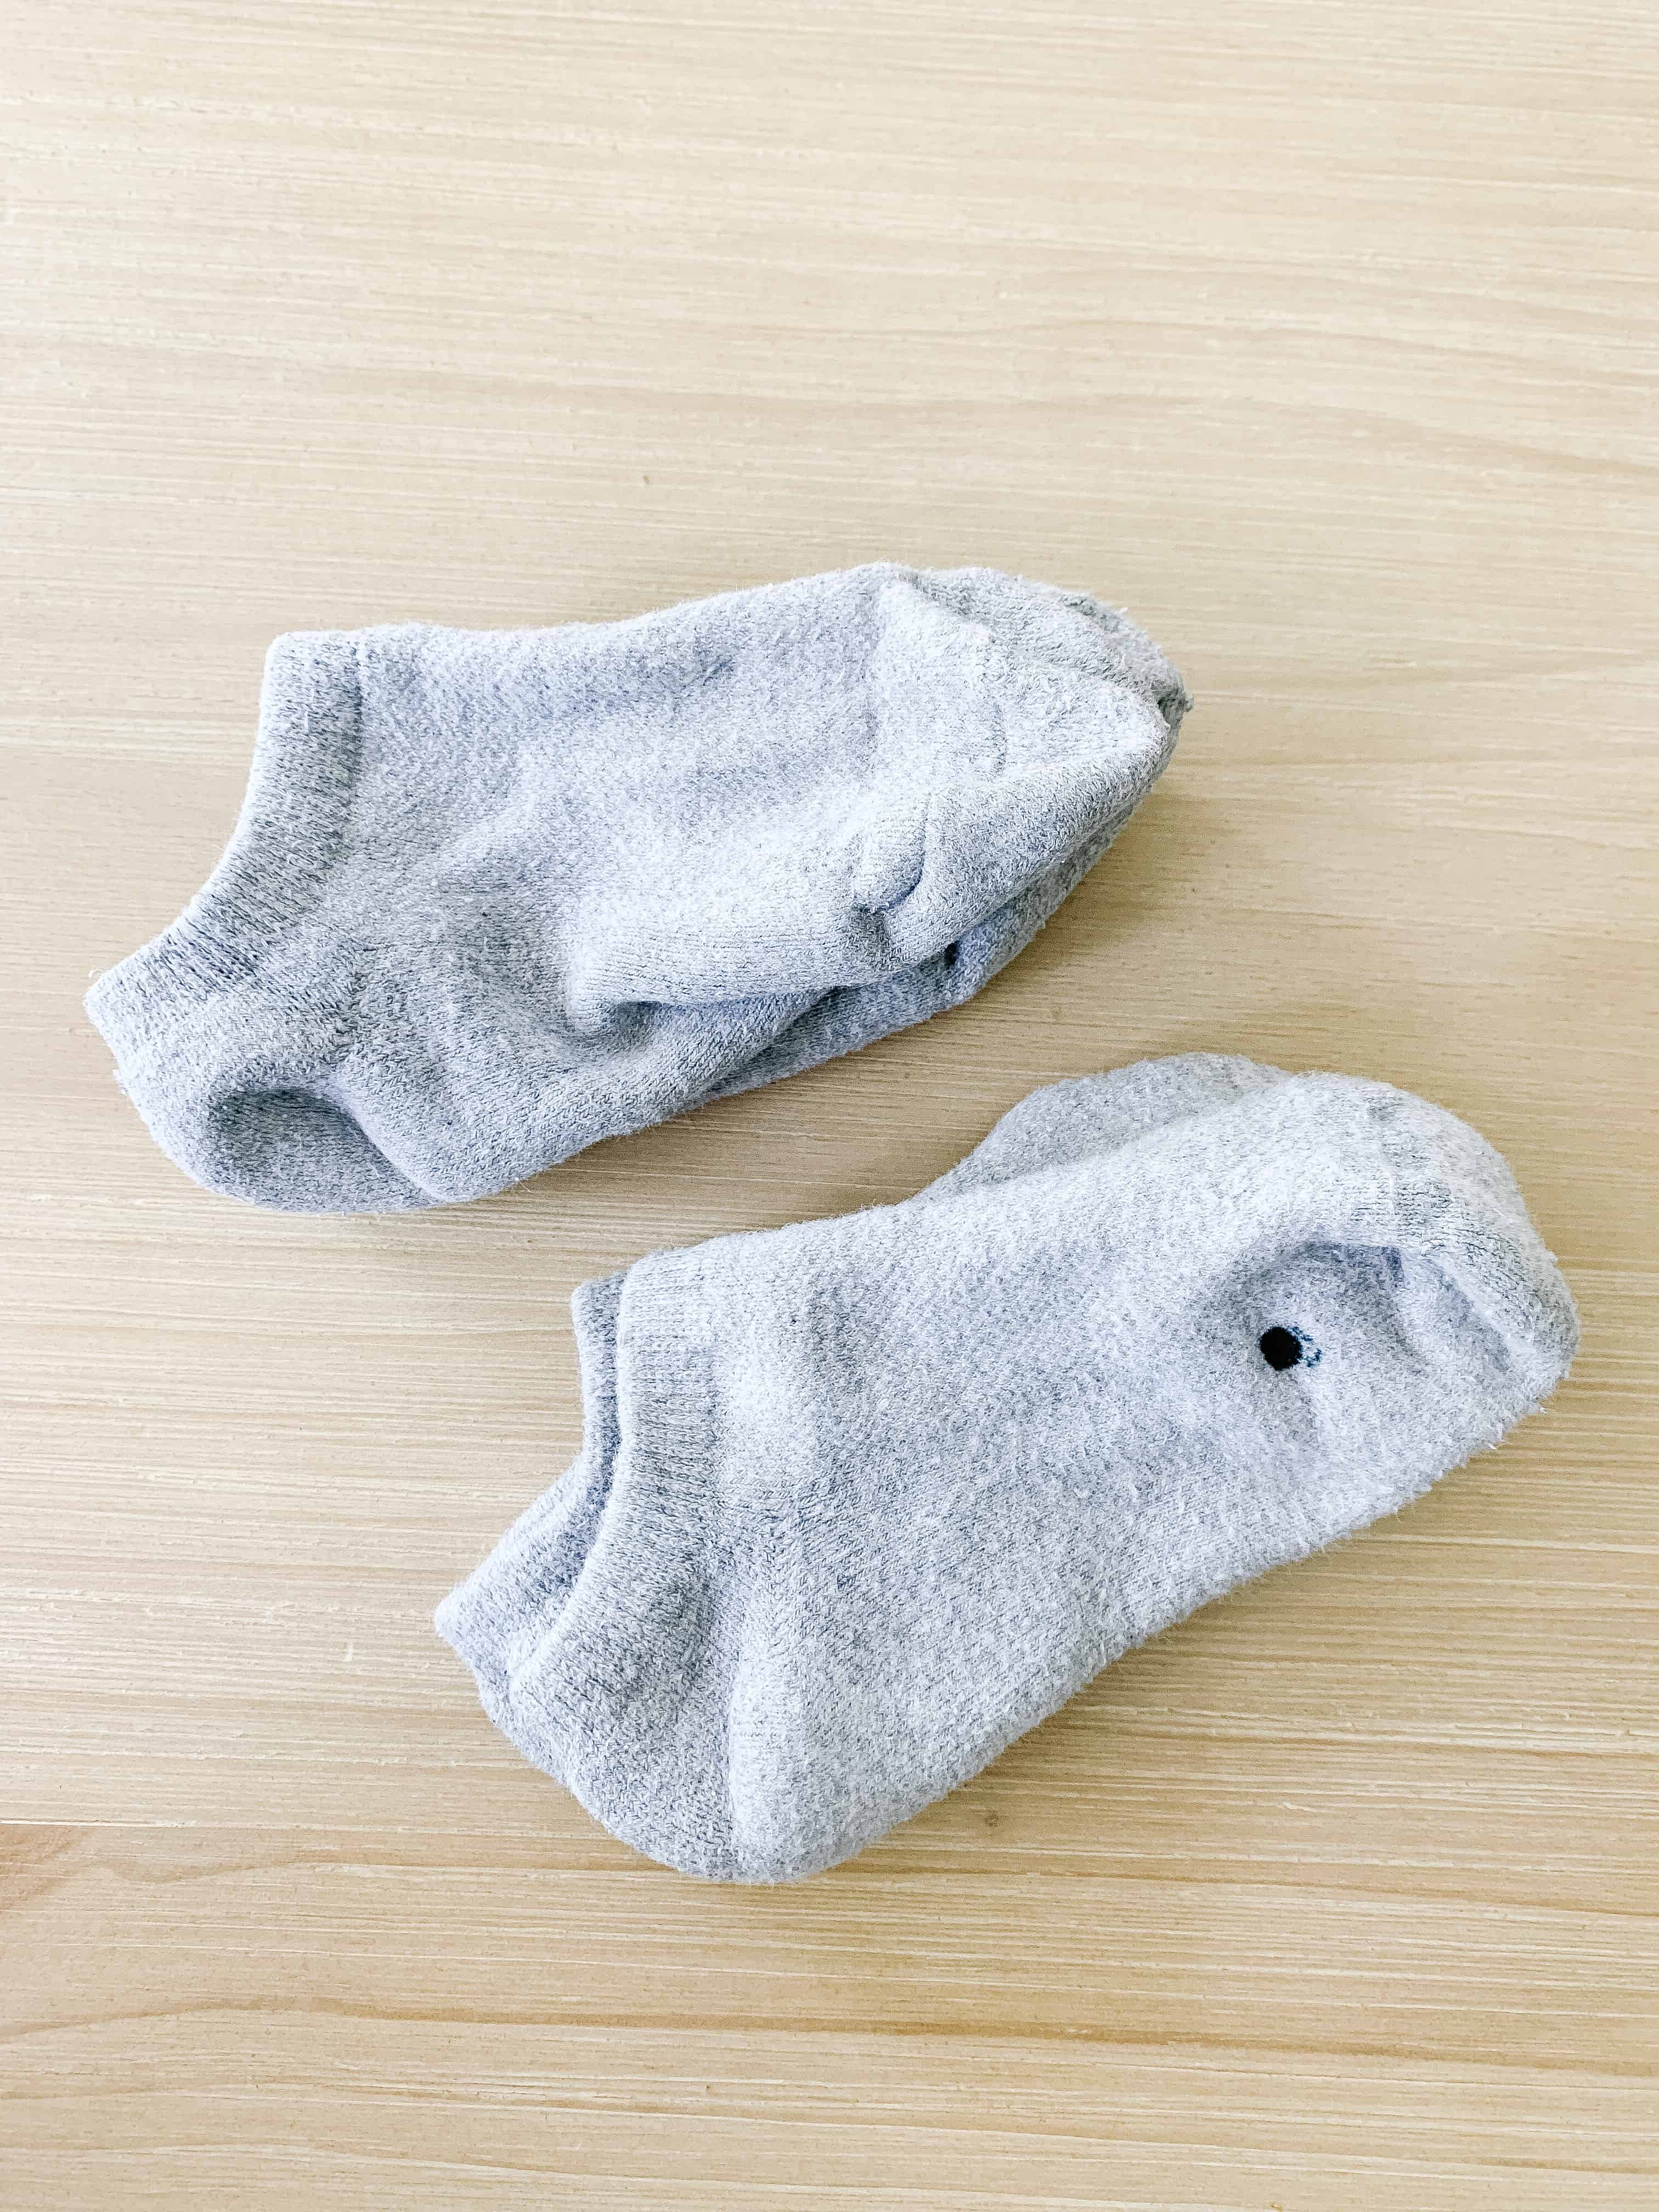 mom hack of marked socks